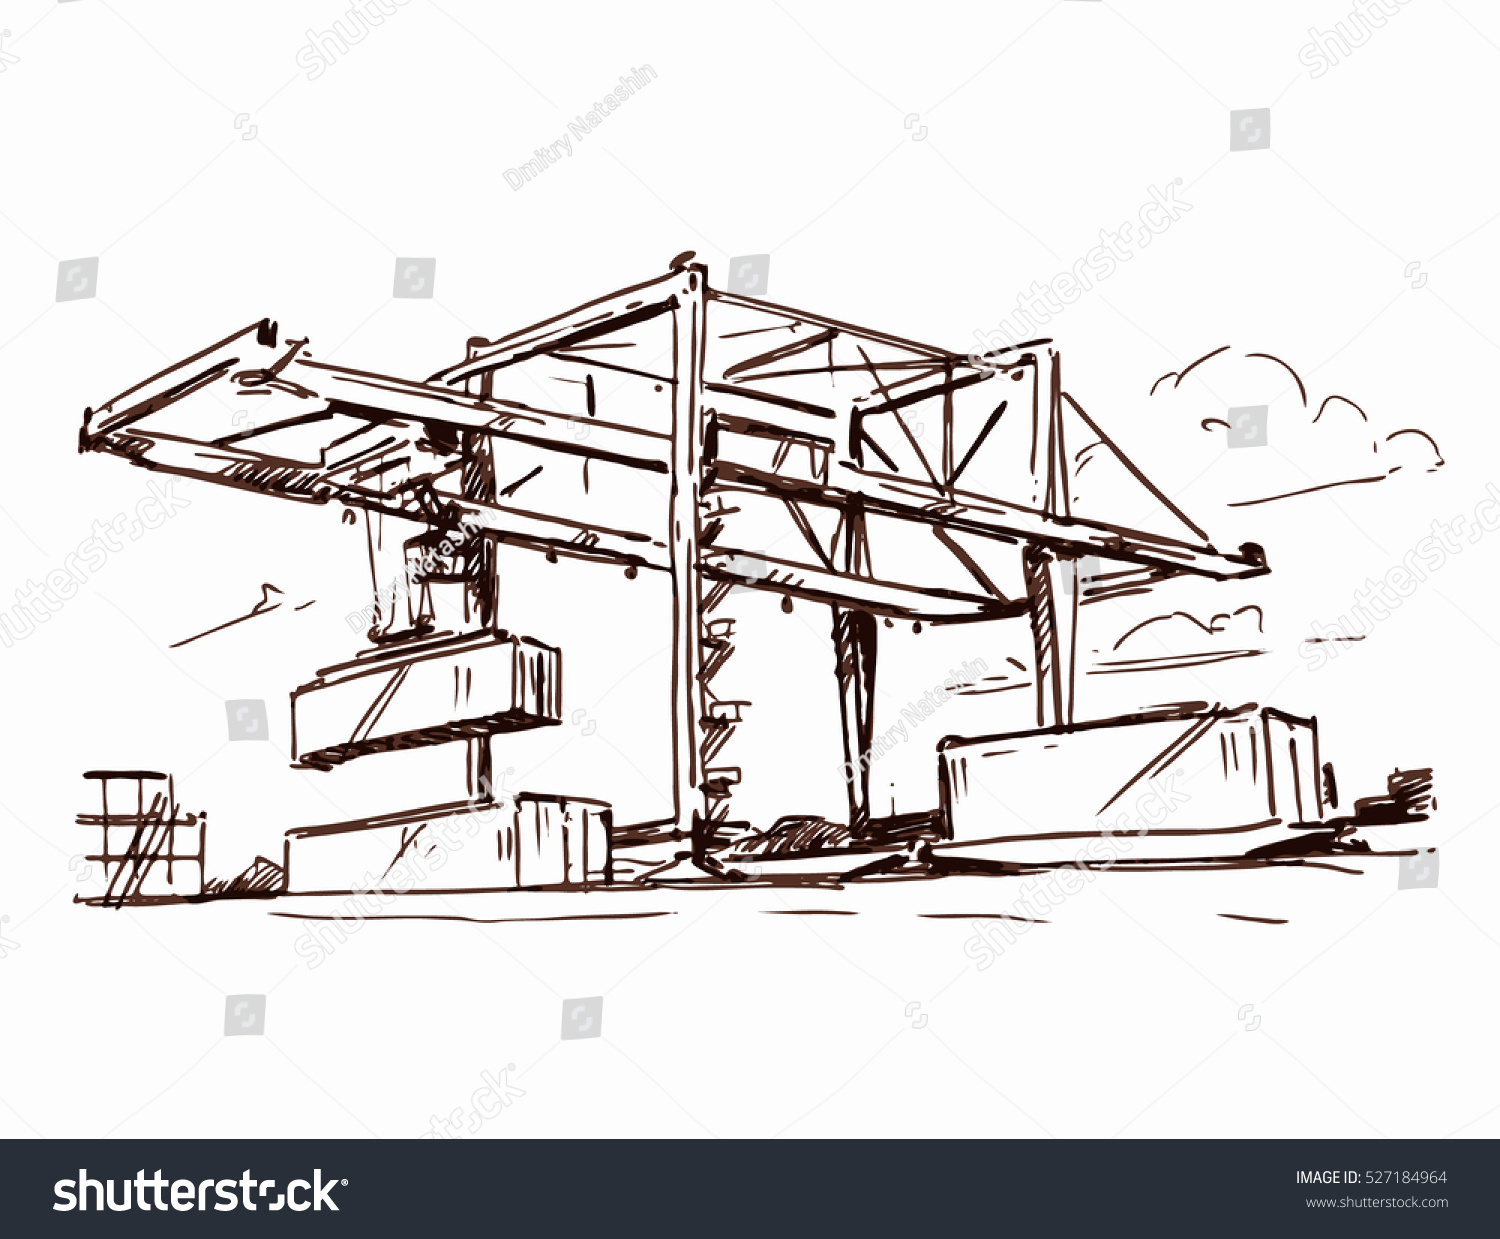 Gantry Crane Sketch Stock Vector Illustration 527184964 : Shutterstock